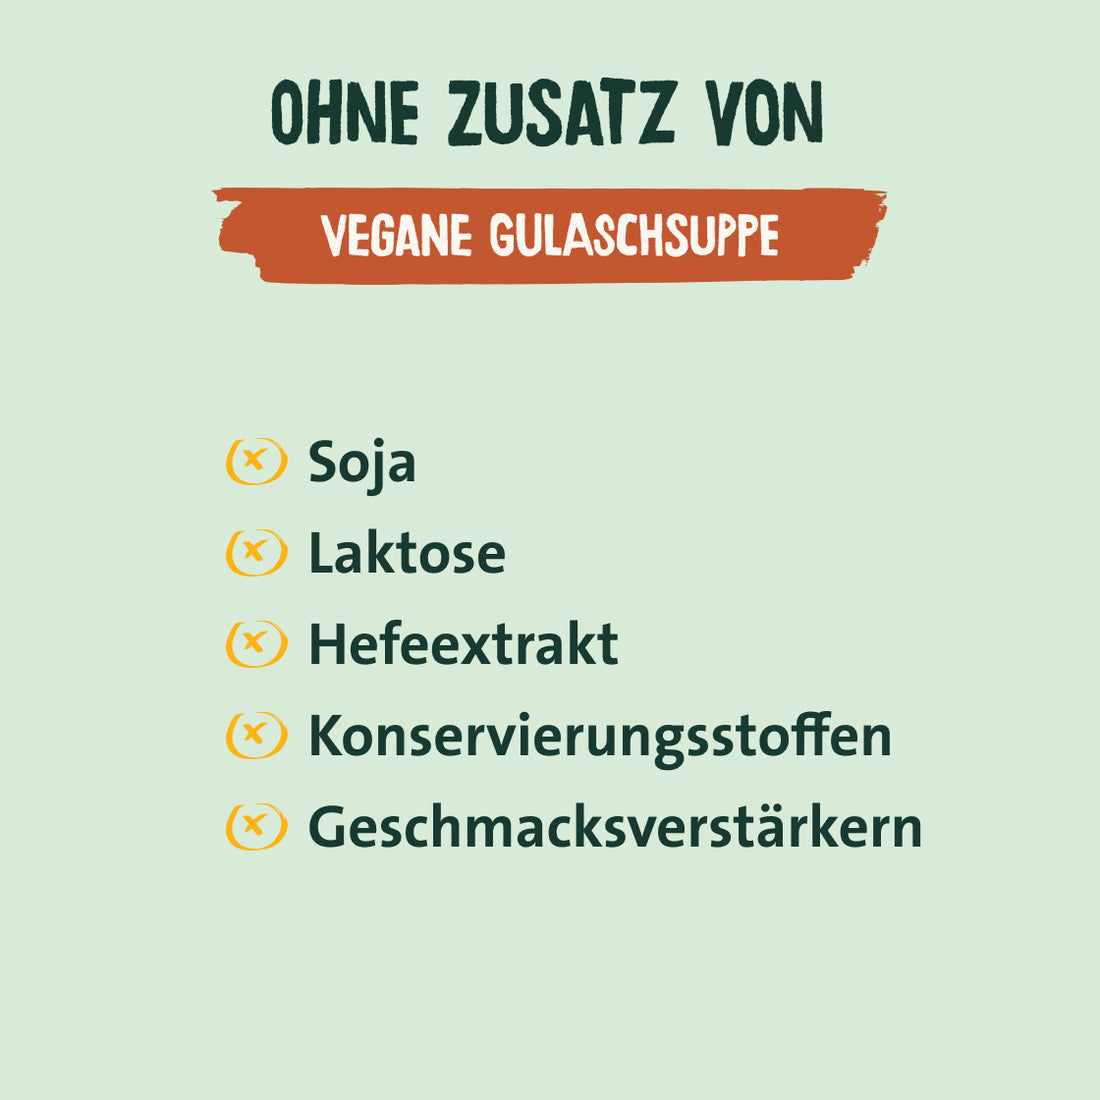 Easy To Mix Vegane Gulaschsuppe